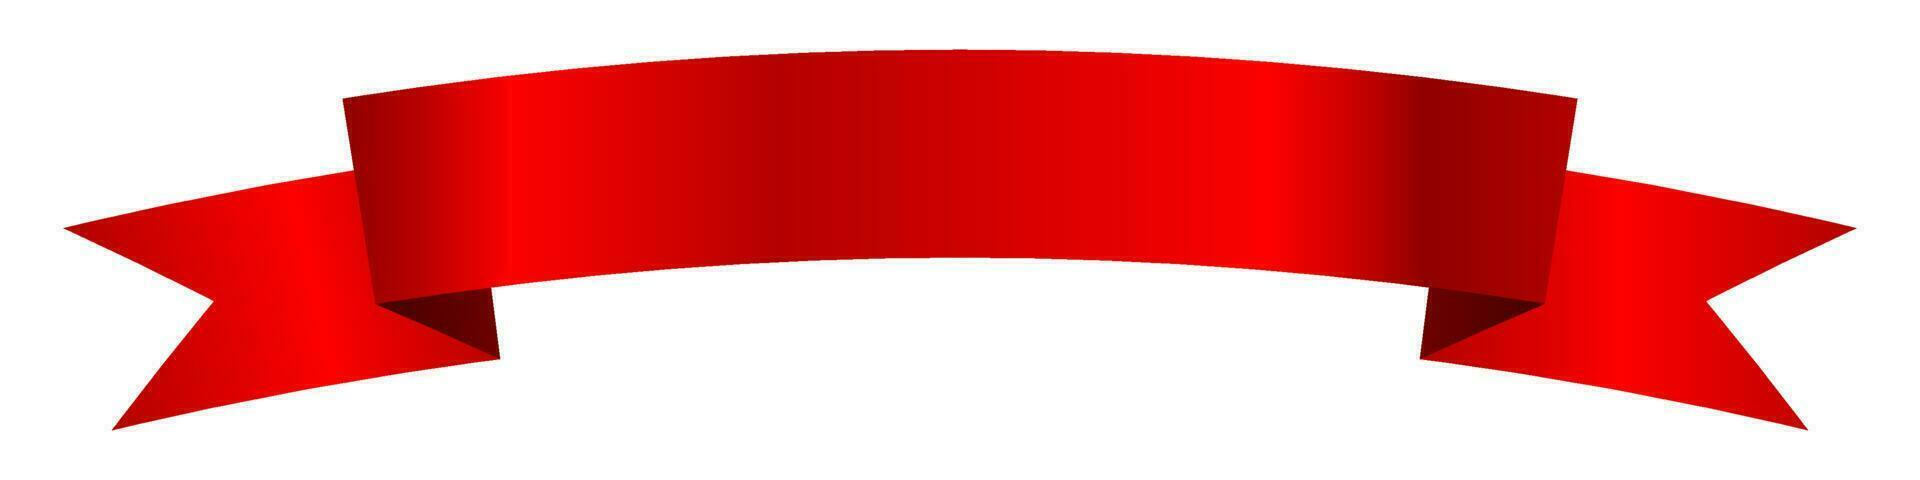 silke röd band eller märka. baner symbol. Vinka baner element. vektor illustration